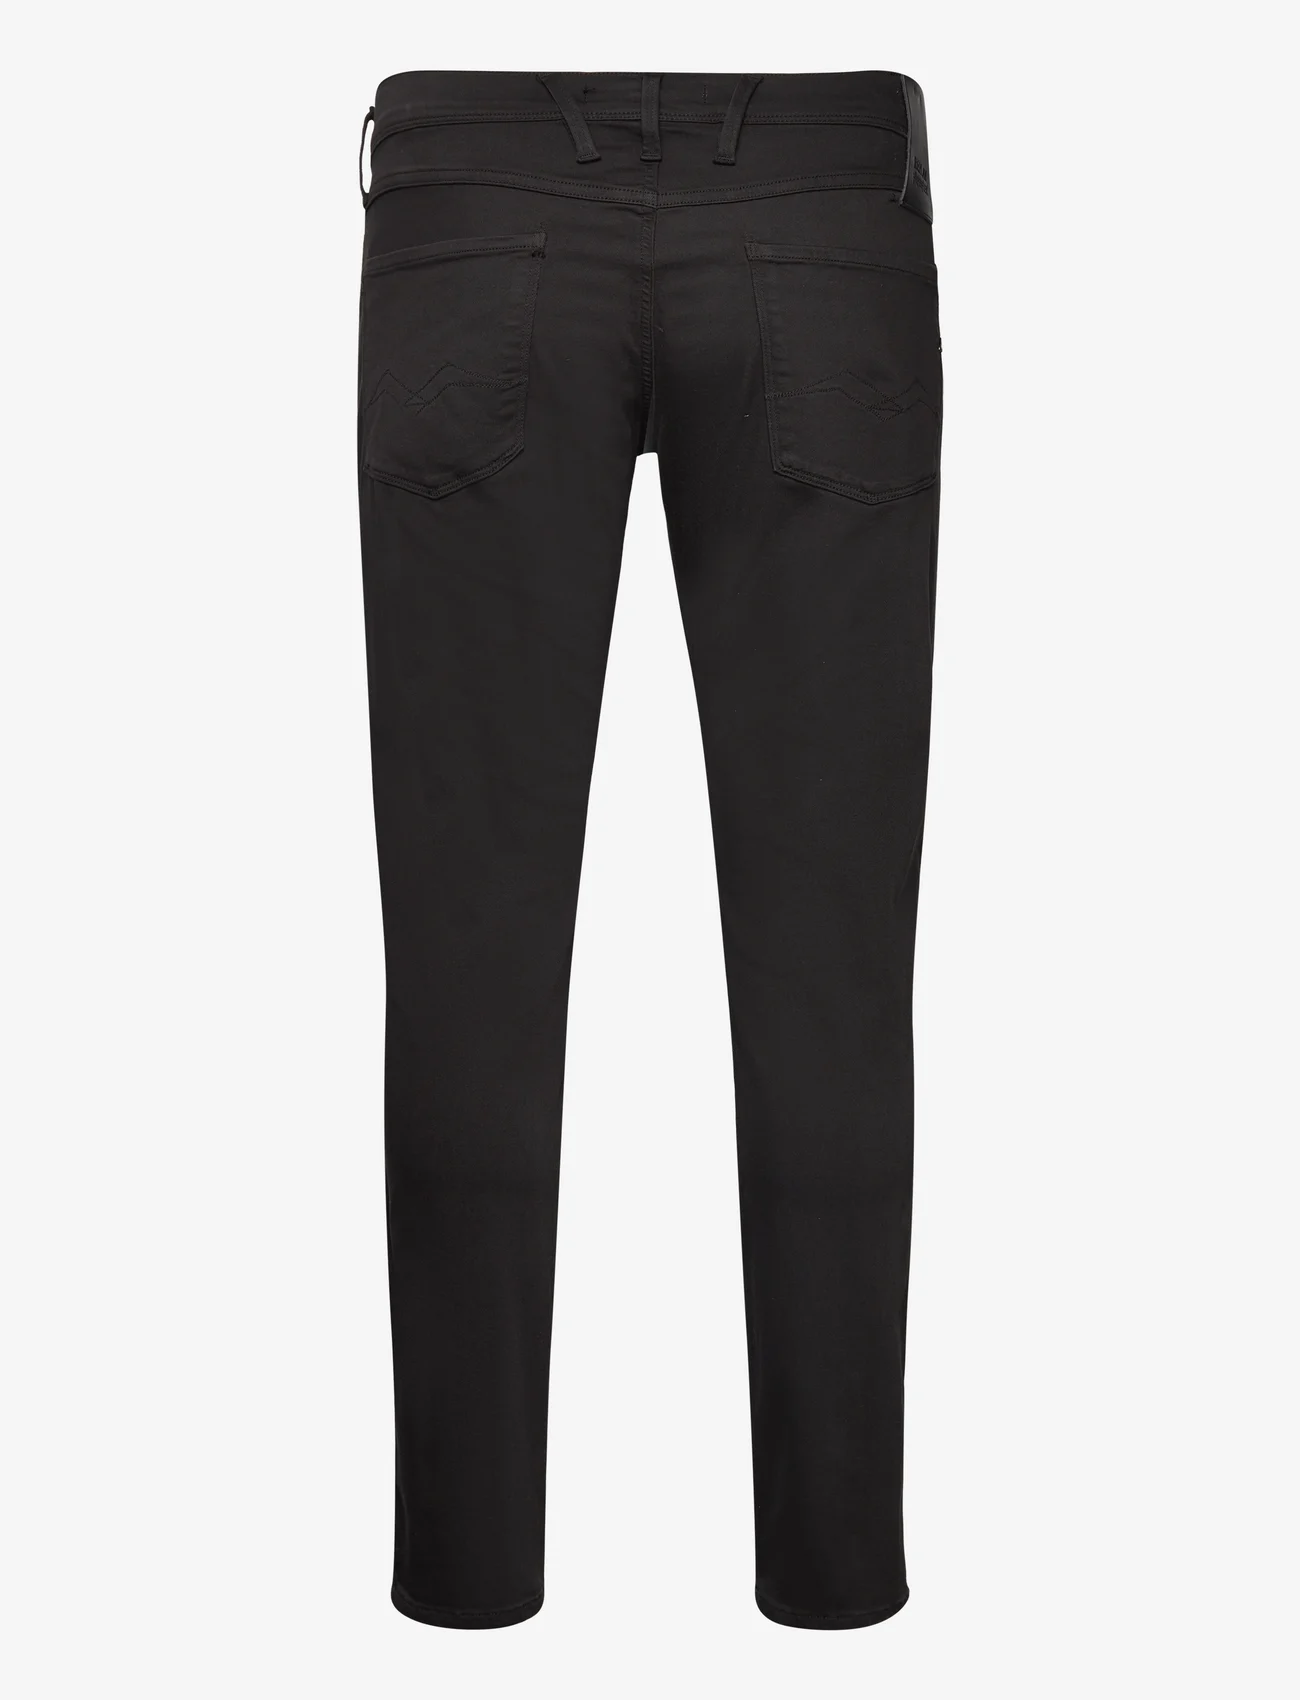 Replay - ANBASS Trousers Hyperflex Colour XLite - kitsad teksad - black - 1